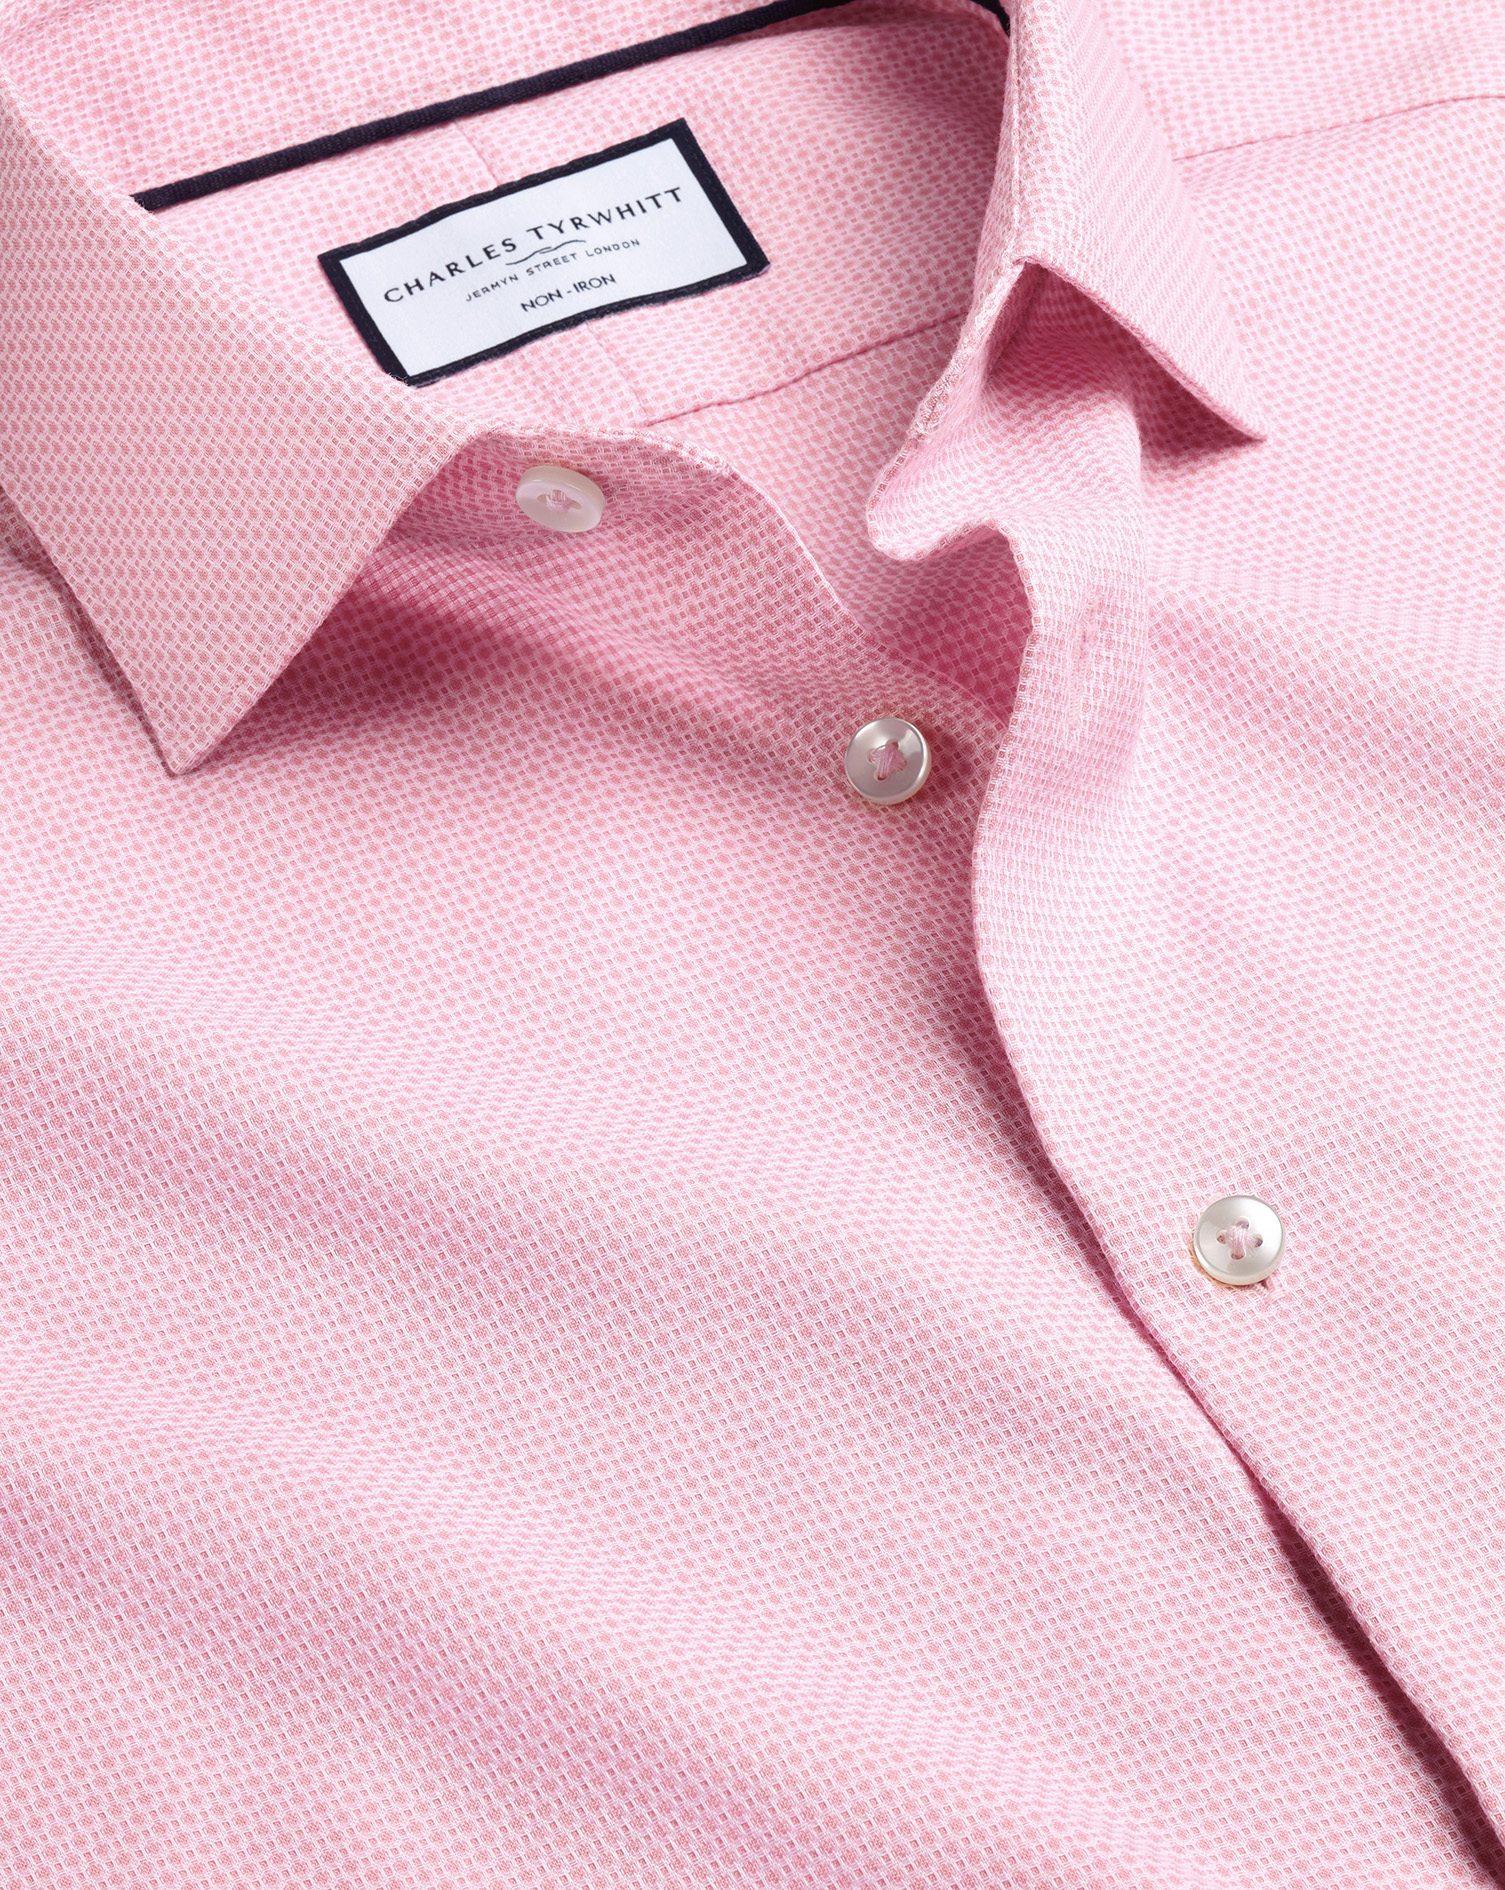 Men's Charles Tyrwhitt Non-Iron Stretch Texture Oval Dress Shirt - Pink Single Cuff Size 14.5/32 Cot